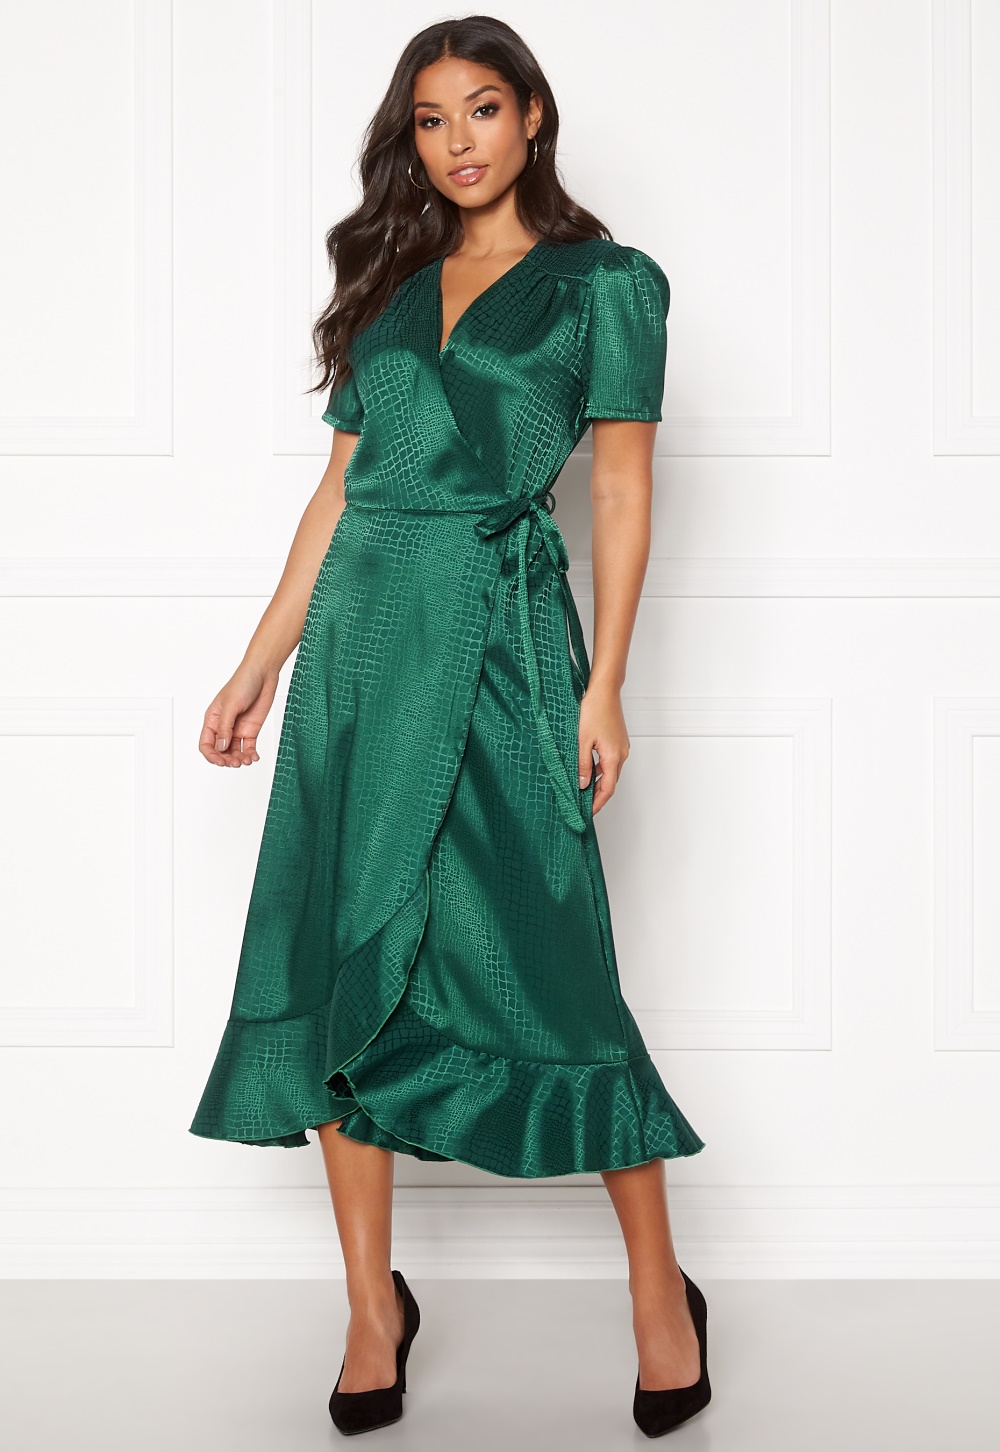 wrap dress emerald green